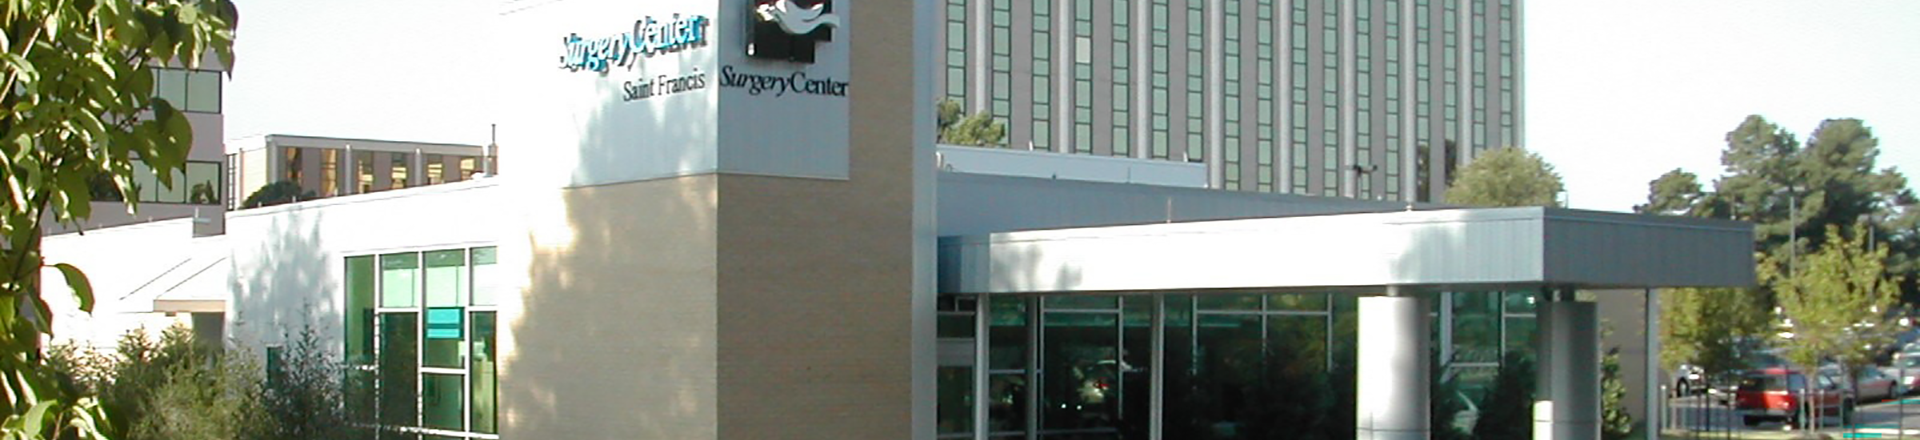 Surgery Center at Saint Francis